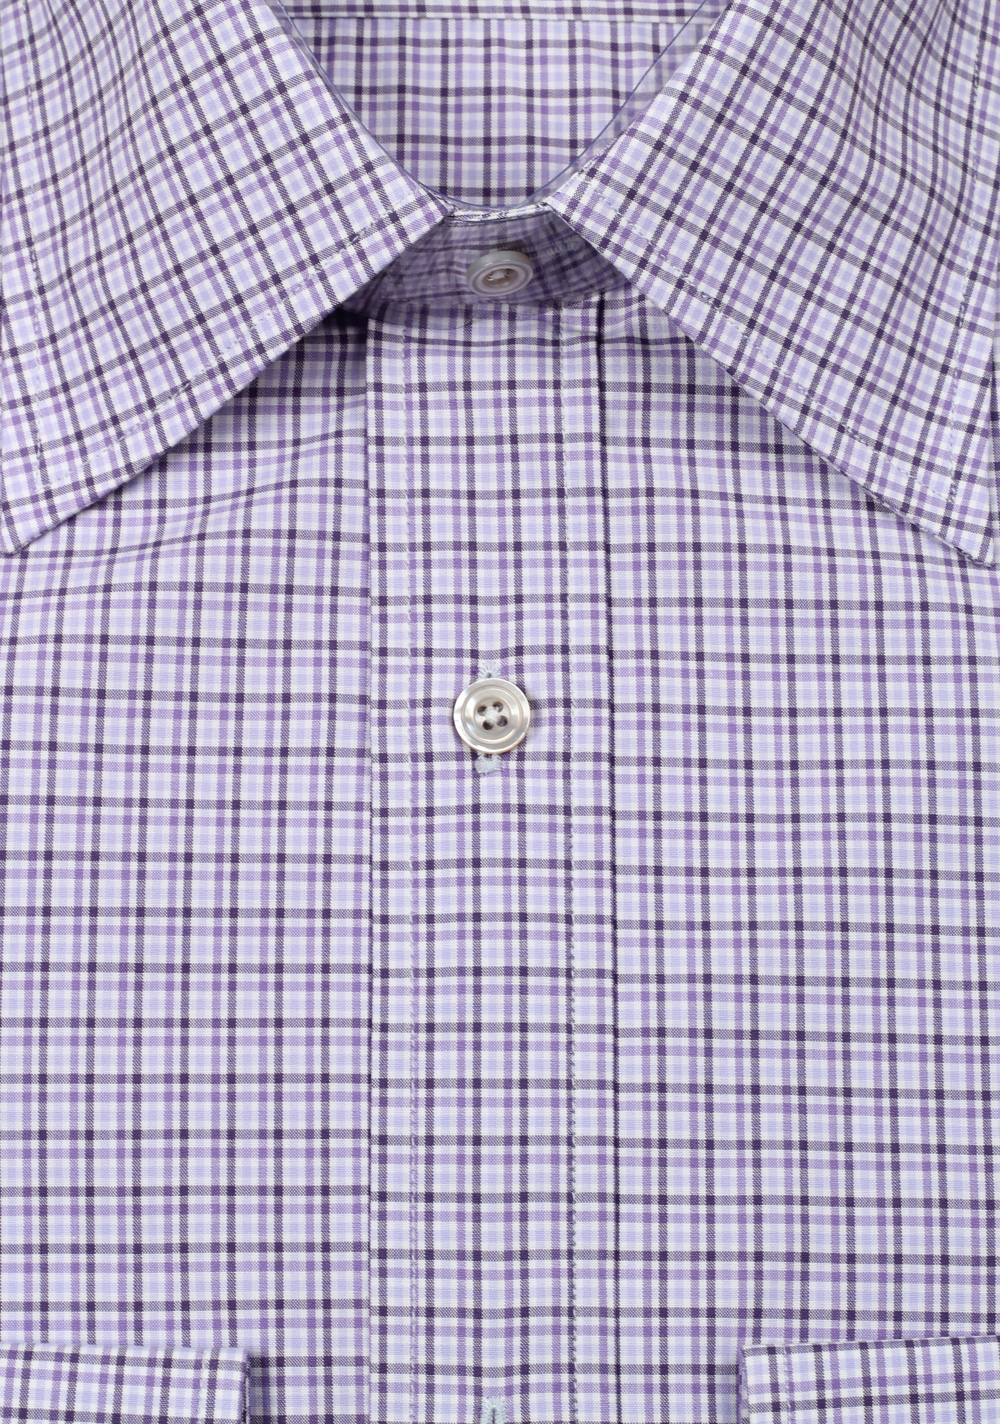 TOM FORD Checked Purple Dress Shirt Size 40 / 15,75 U.S. | Costume Limité